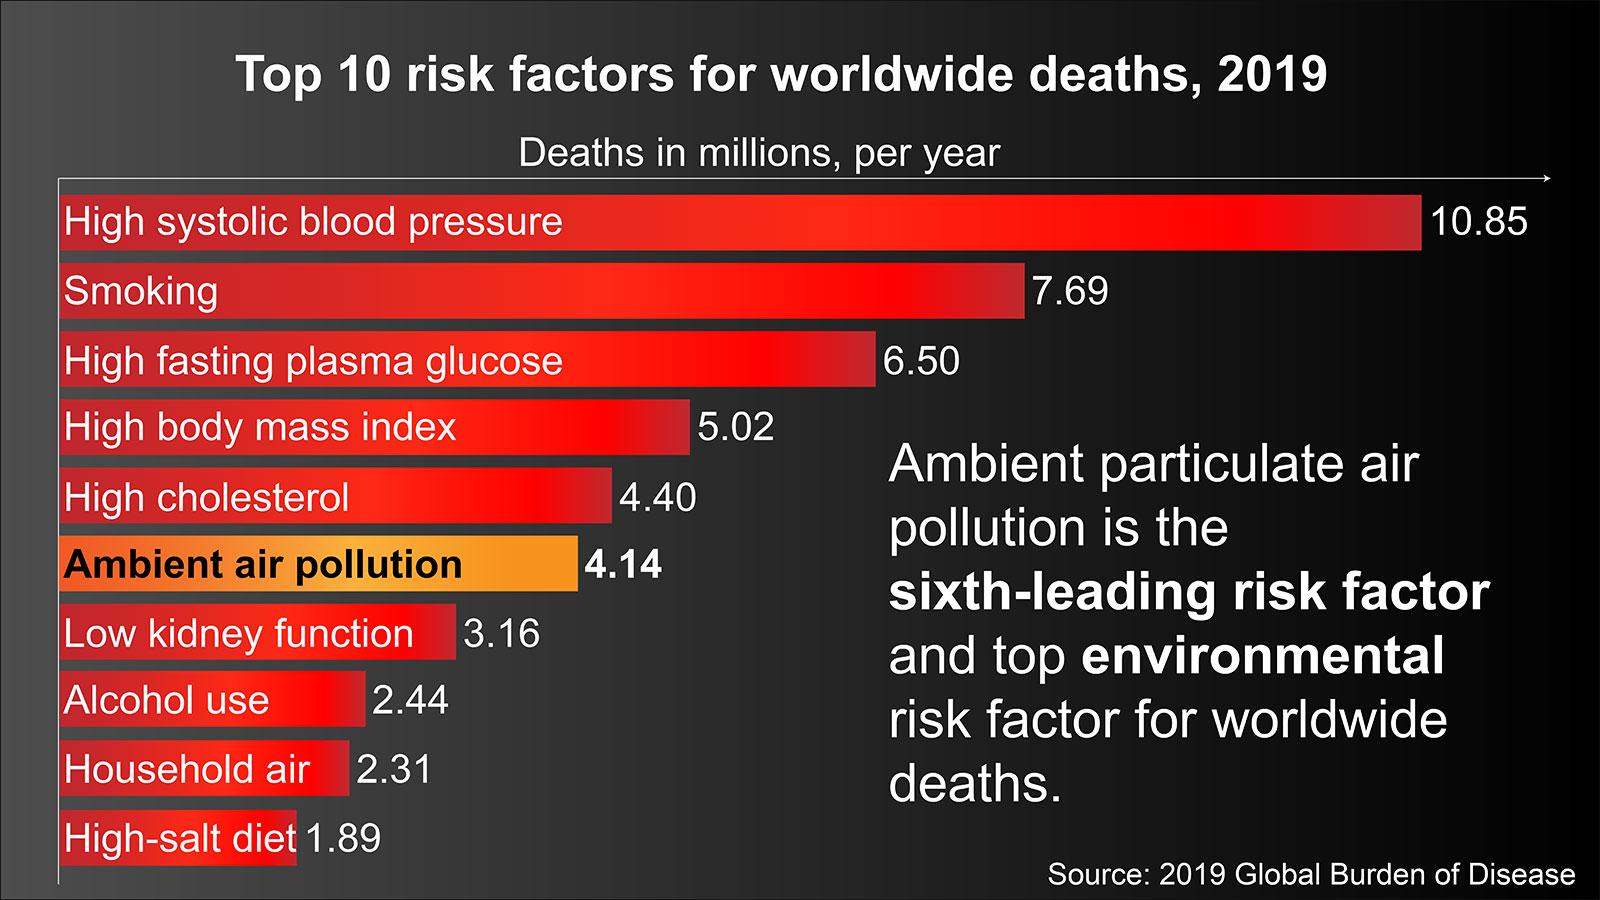 Top 10 risk factors for premature death, 2016